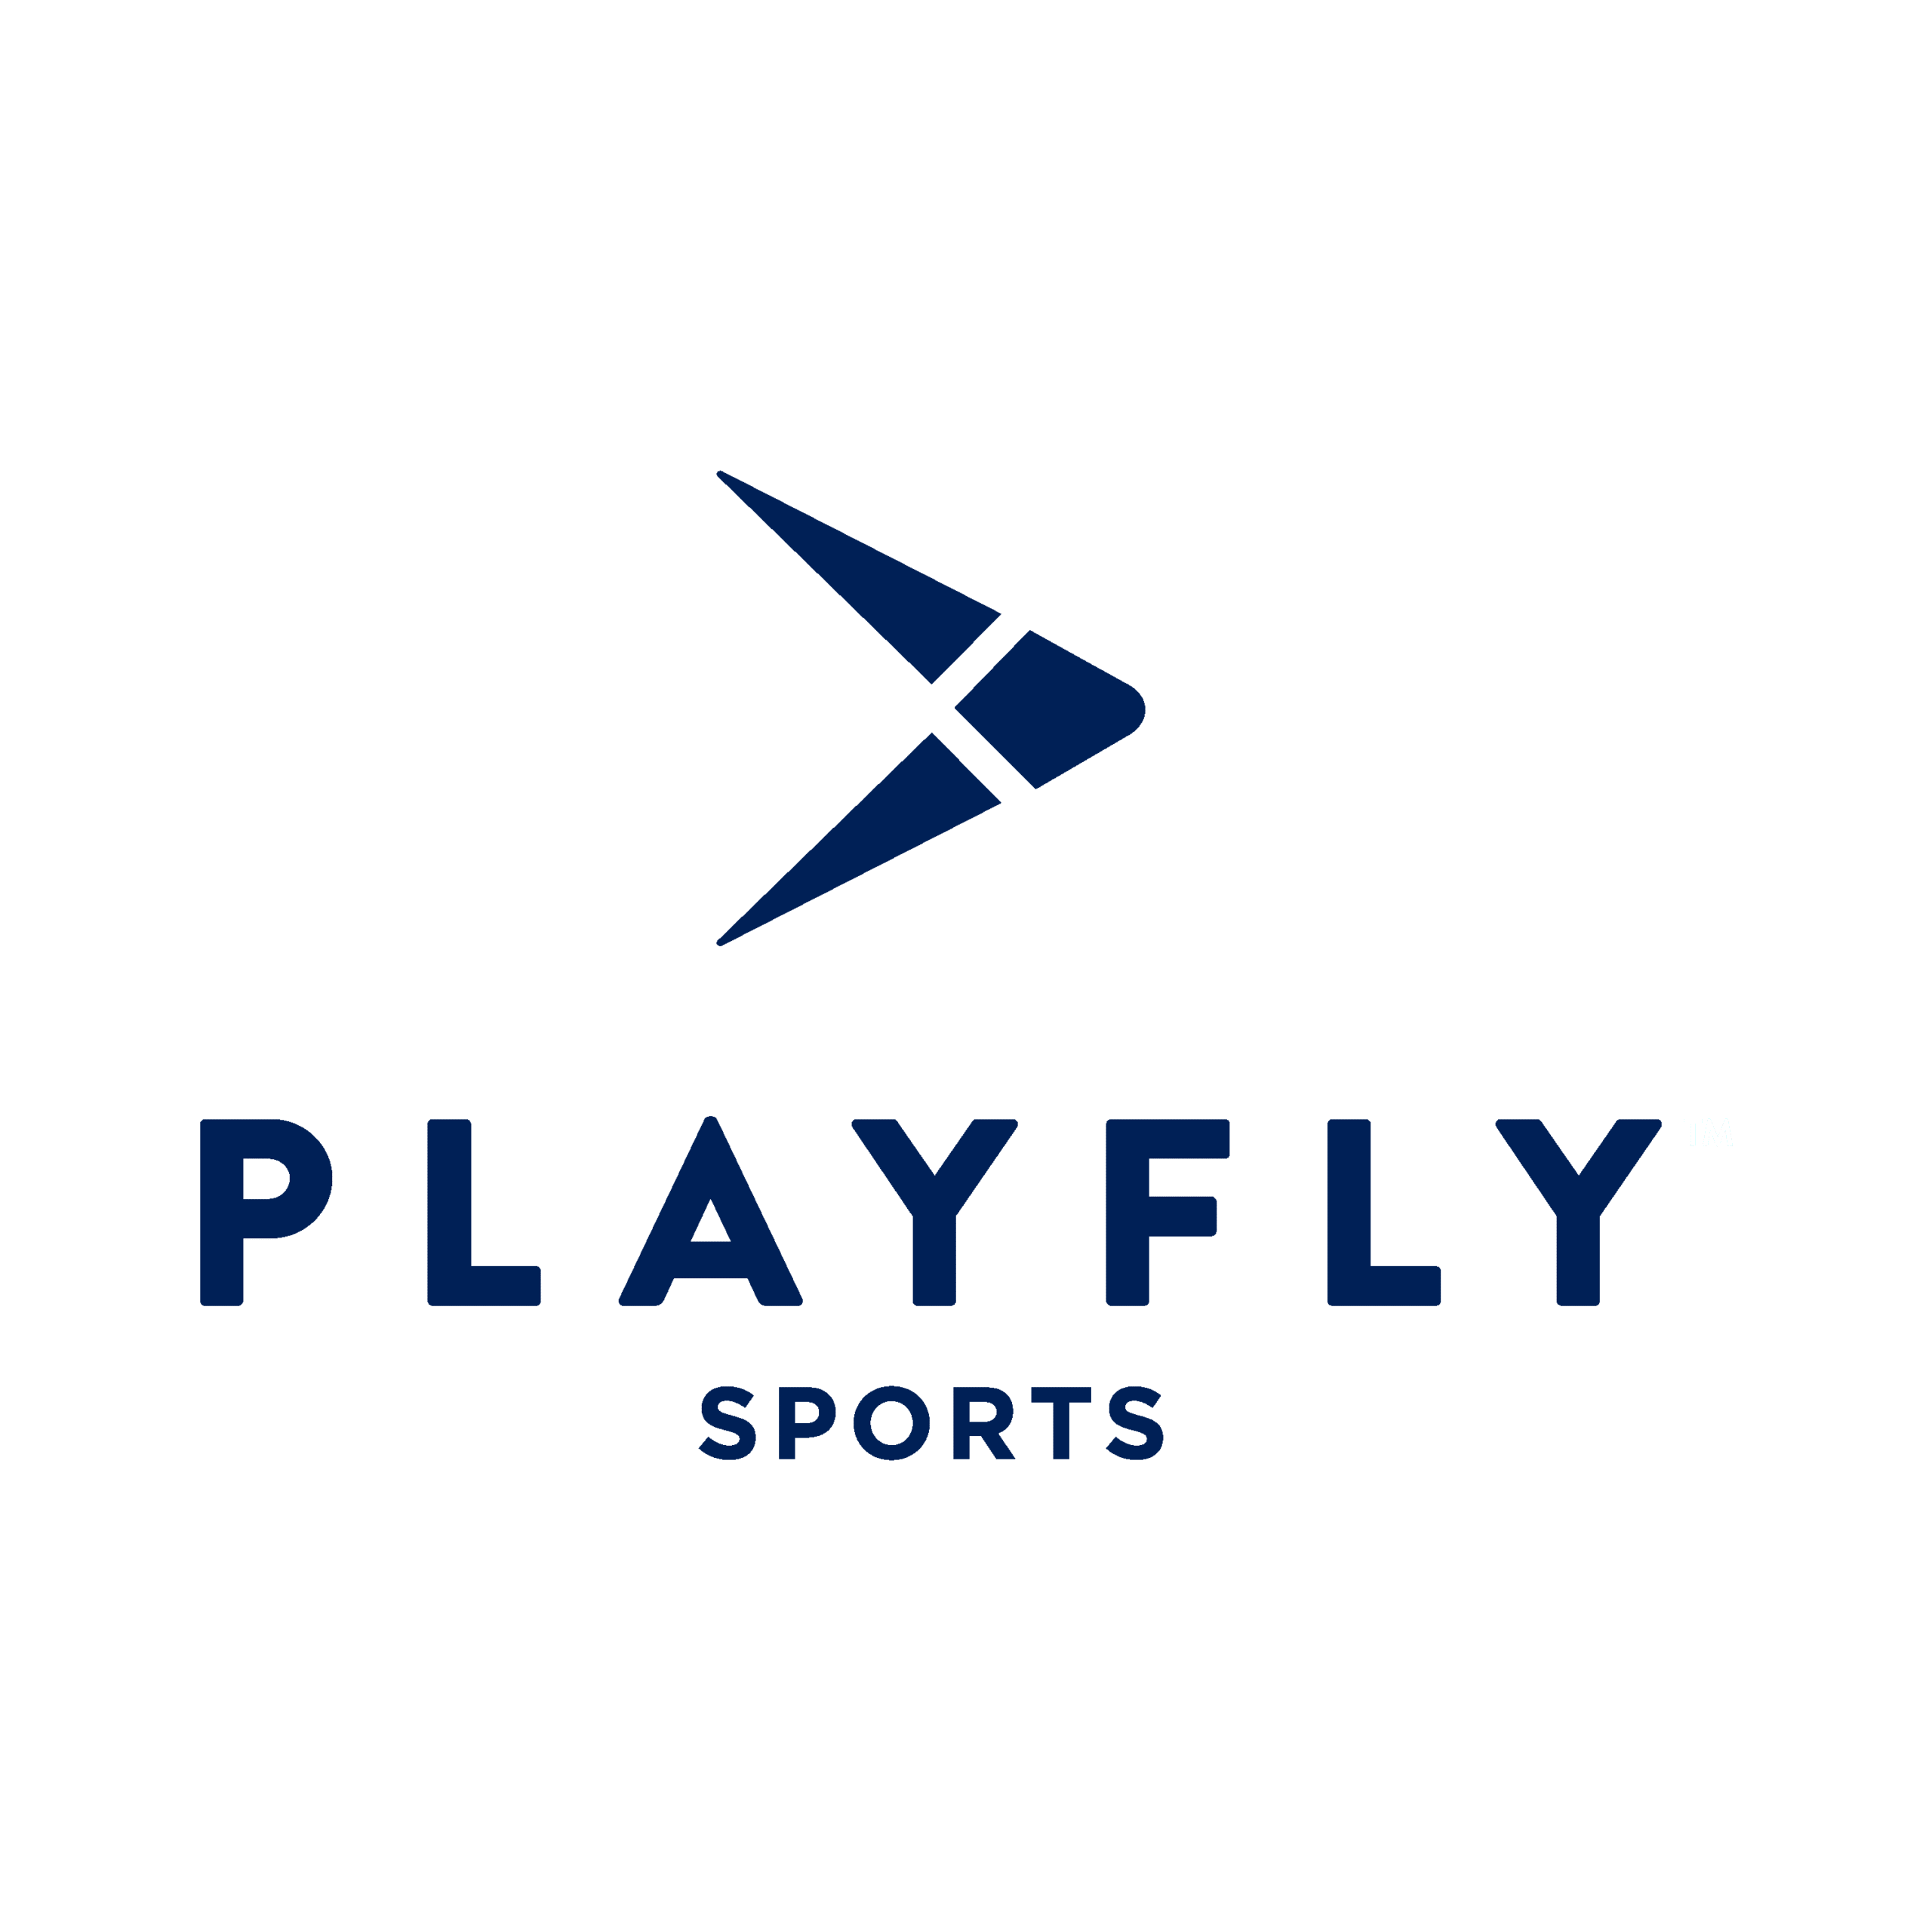 Playfly Sports logo